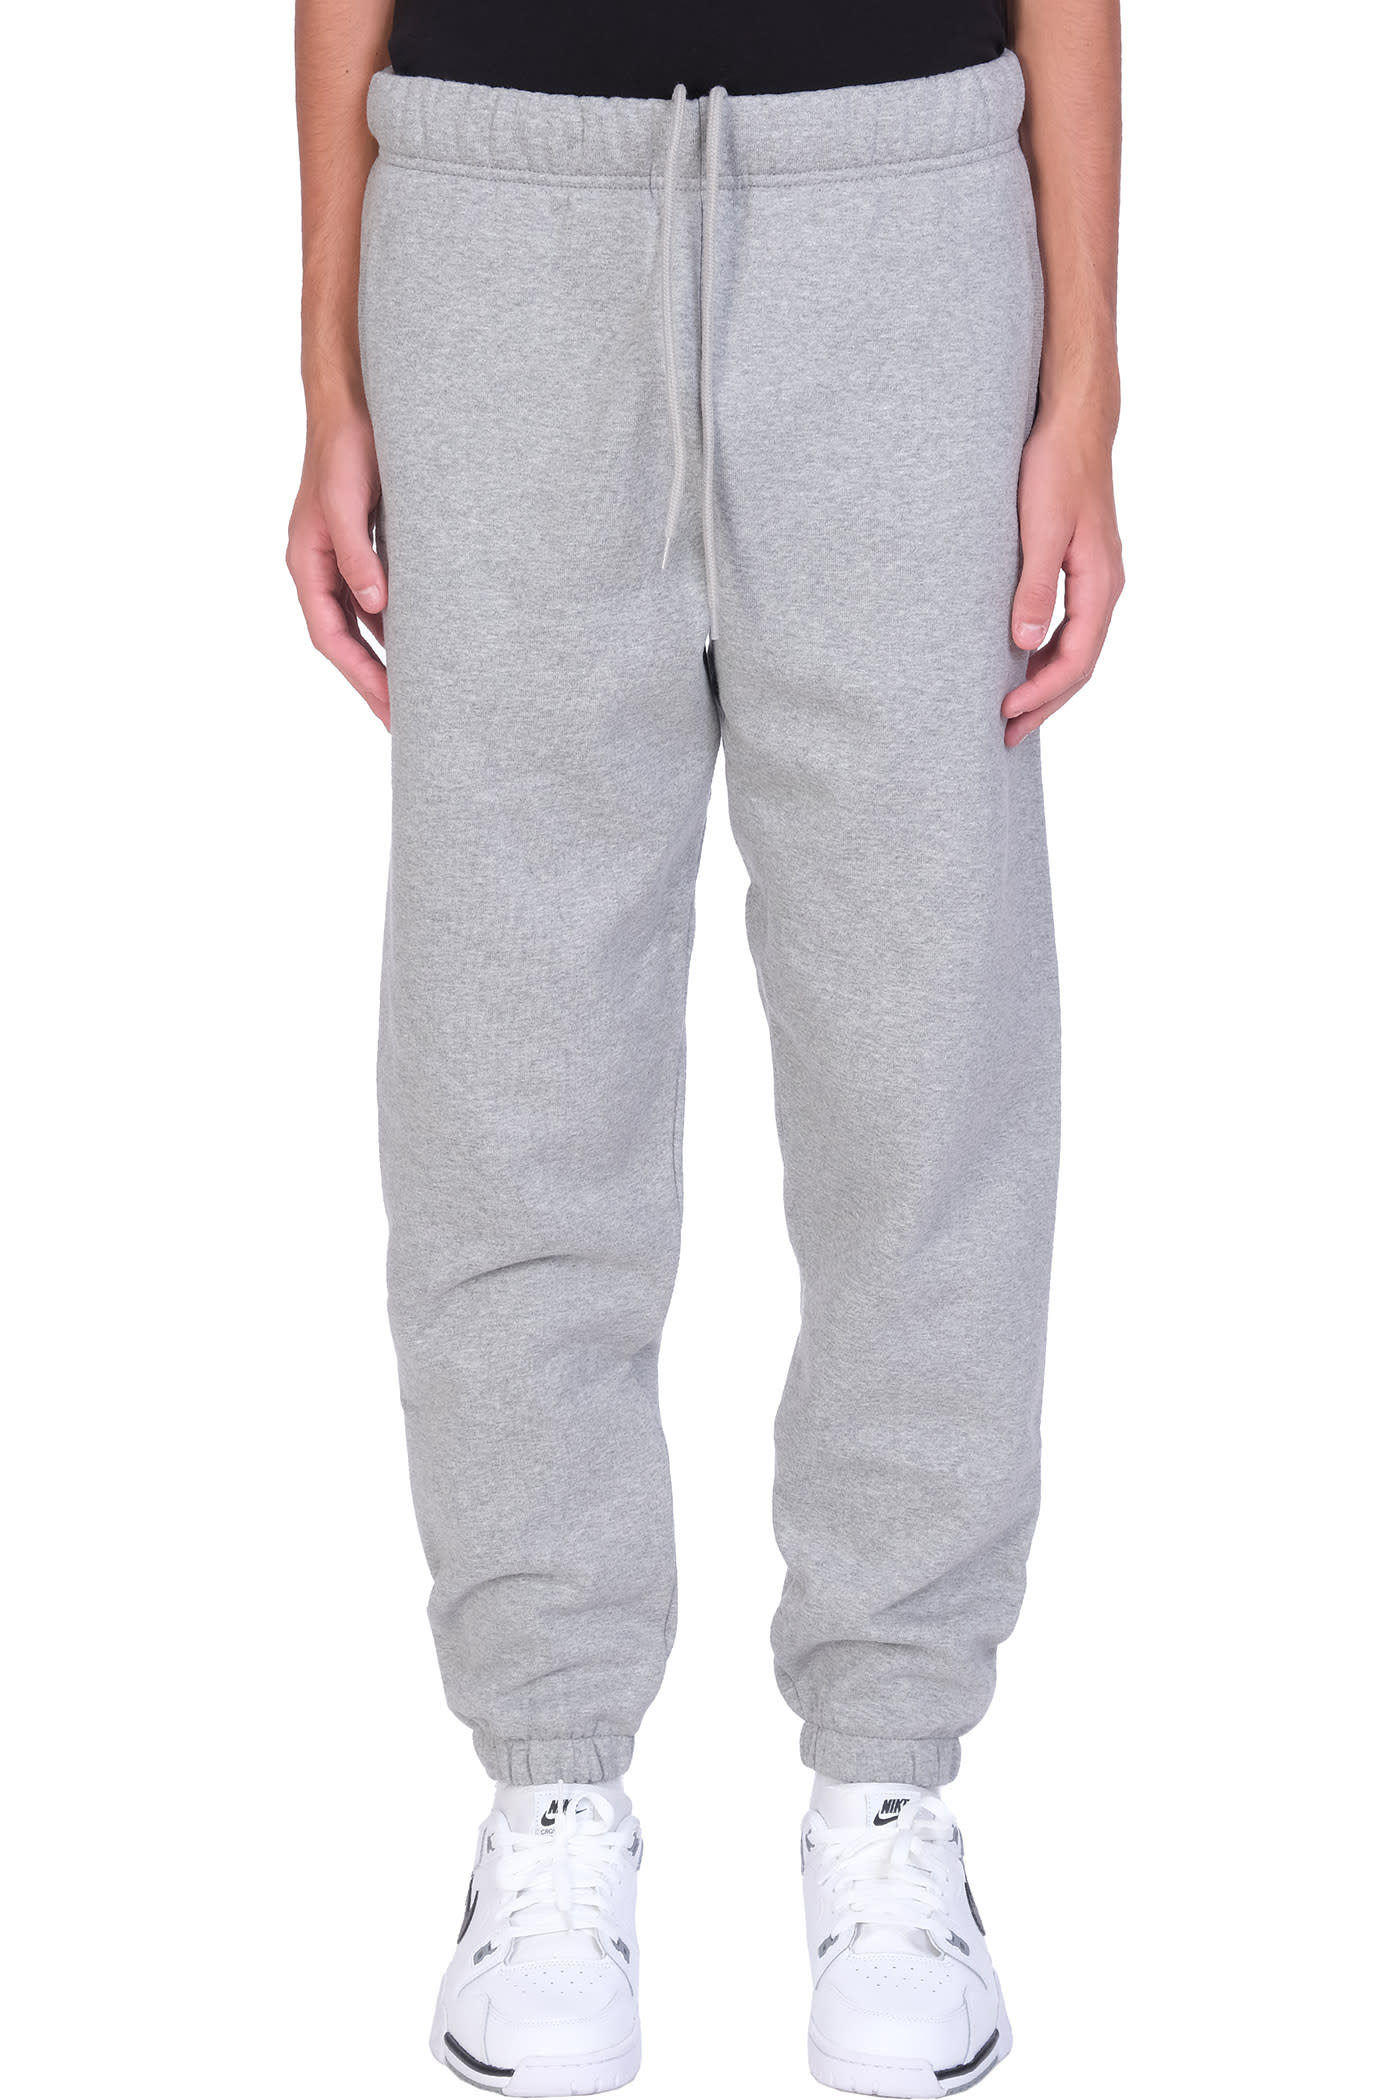 Carhartt Pants In Grey Cotton